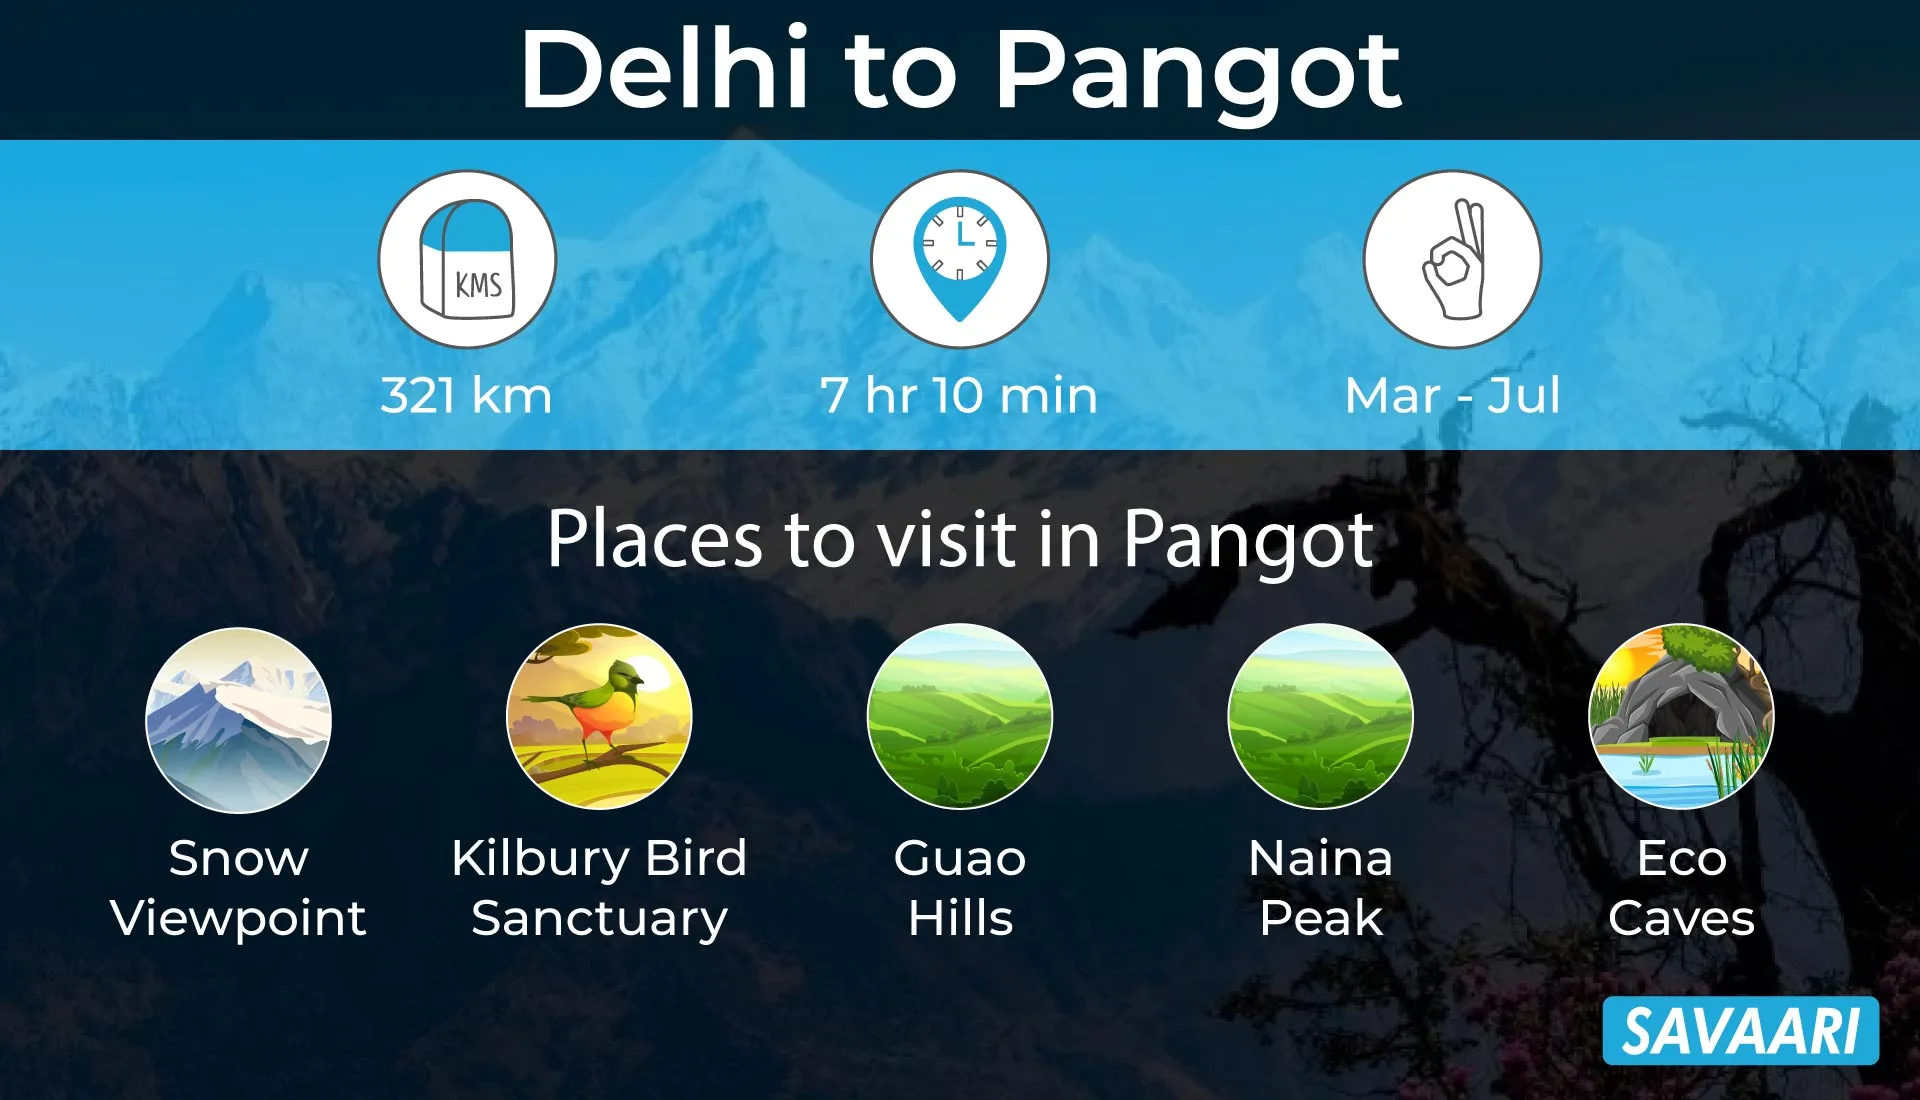 Delhi to Pangot road trip